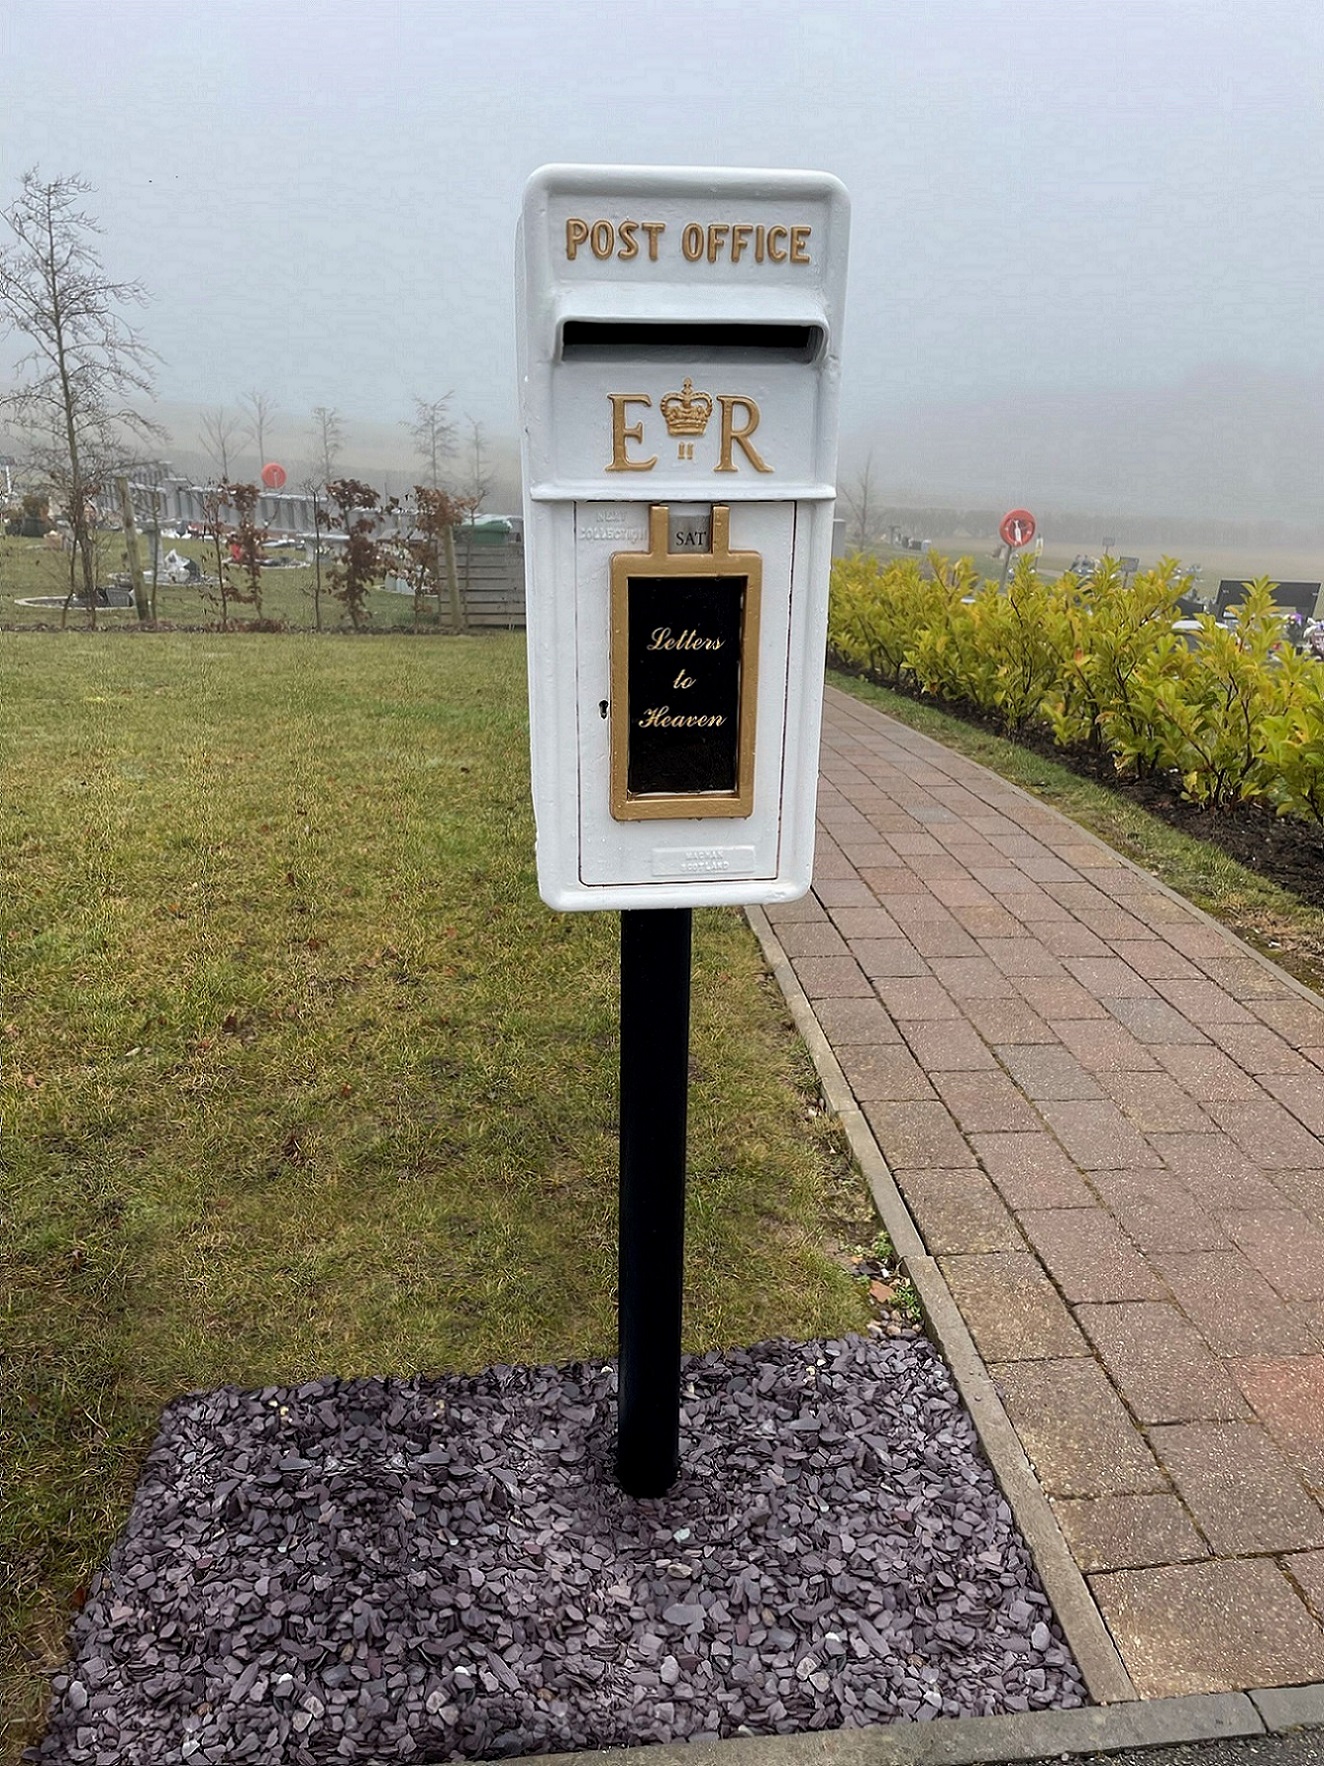 A Westerleigh Group memorial post box